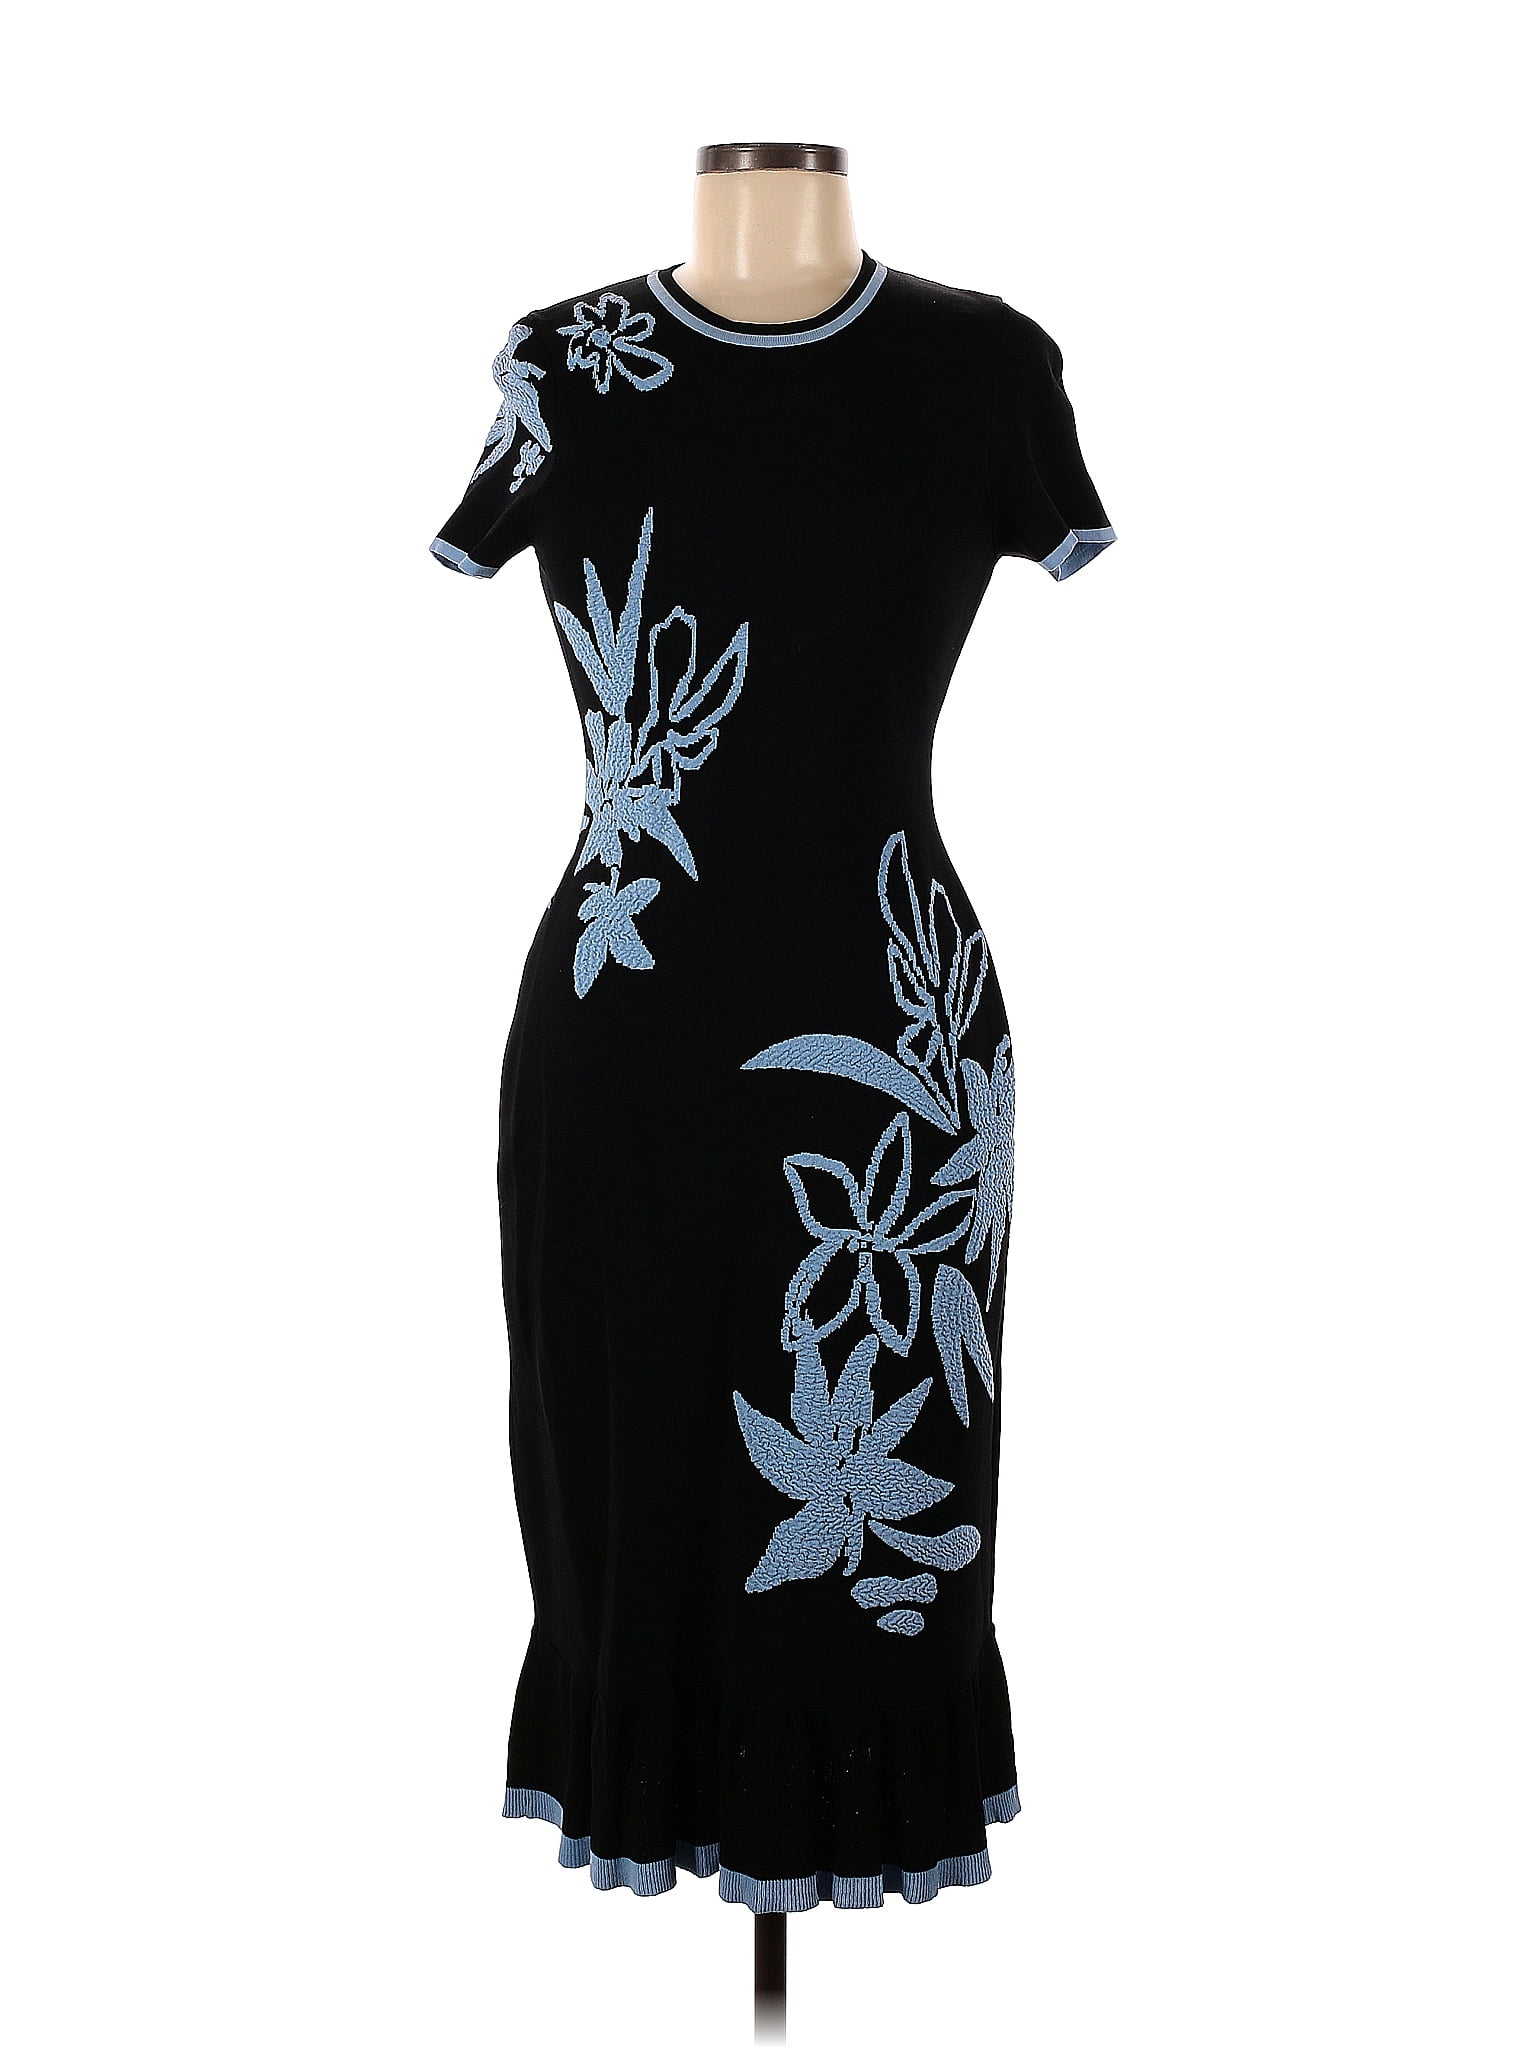 Lululemon Velvet Floral Cutout Leggings Black Size 4 - $45 (64% Off Retail)  - From Taylor